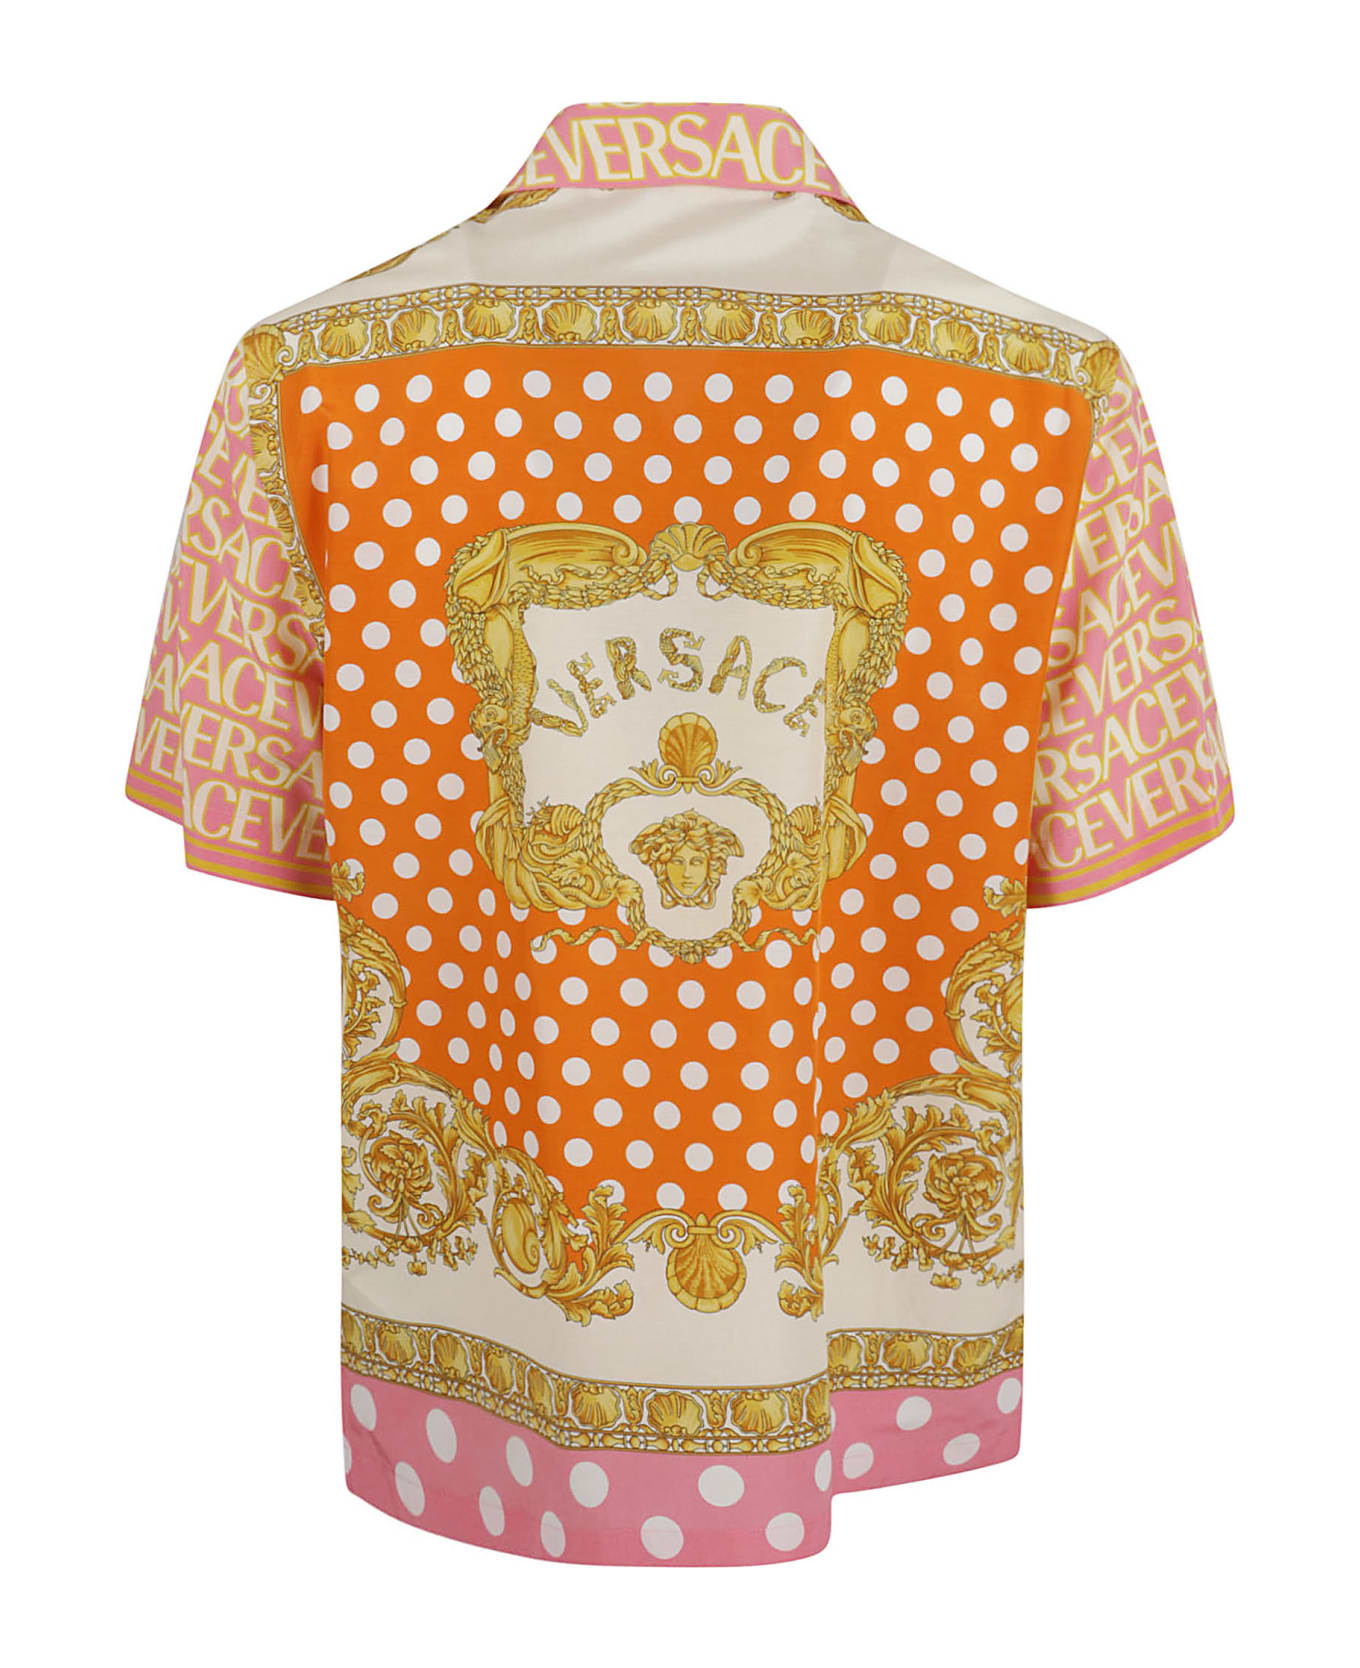 Versace Informal Combo Shirt